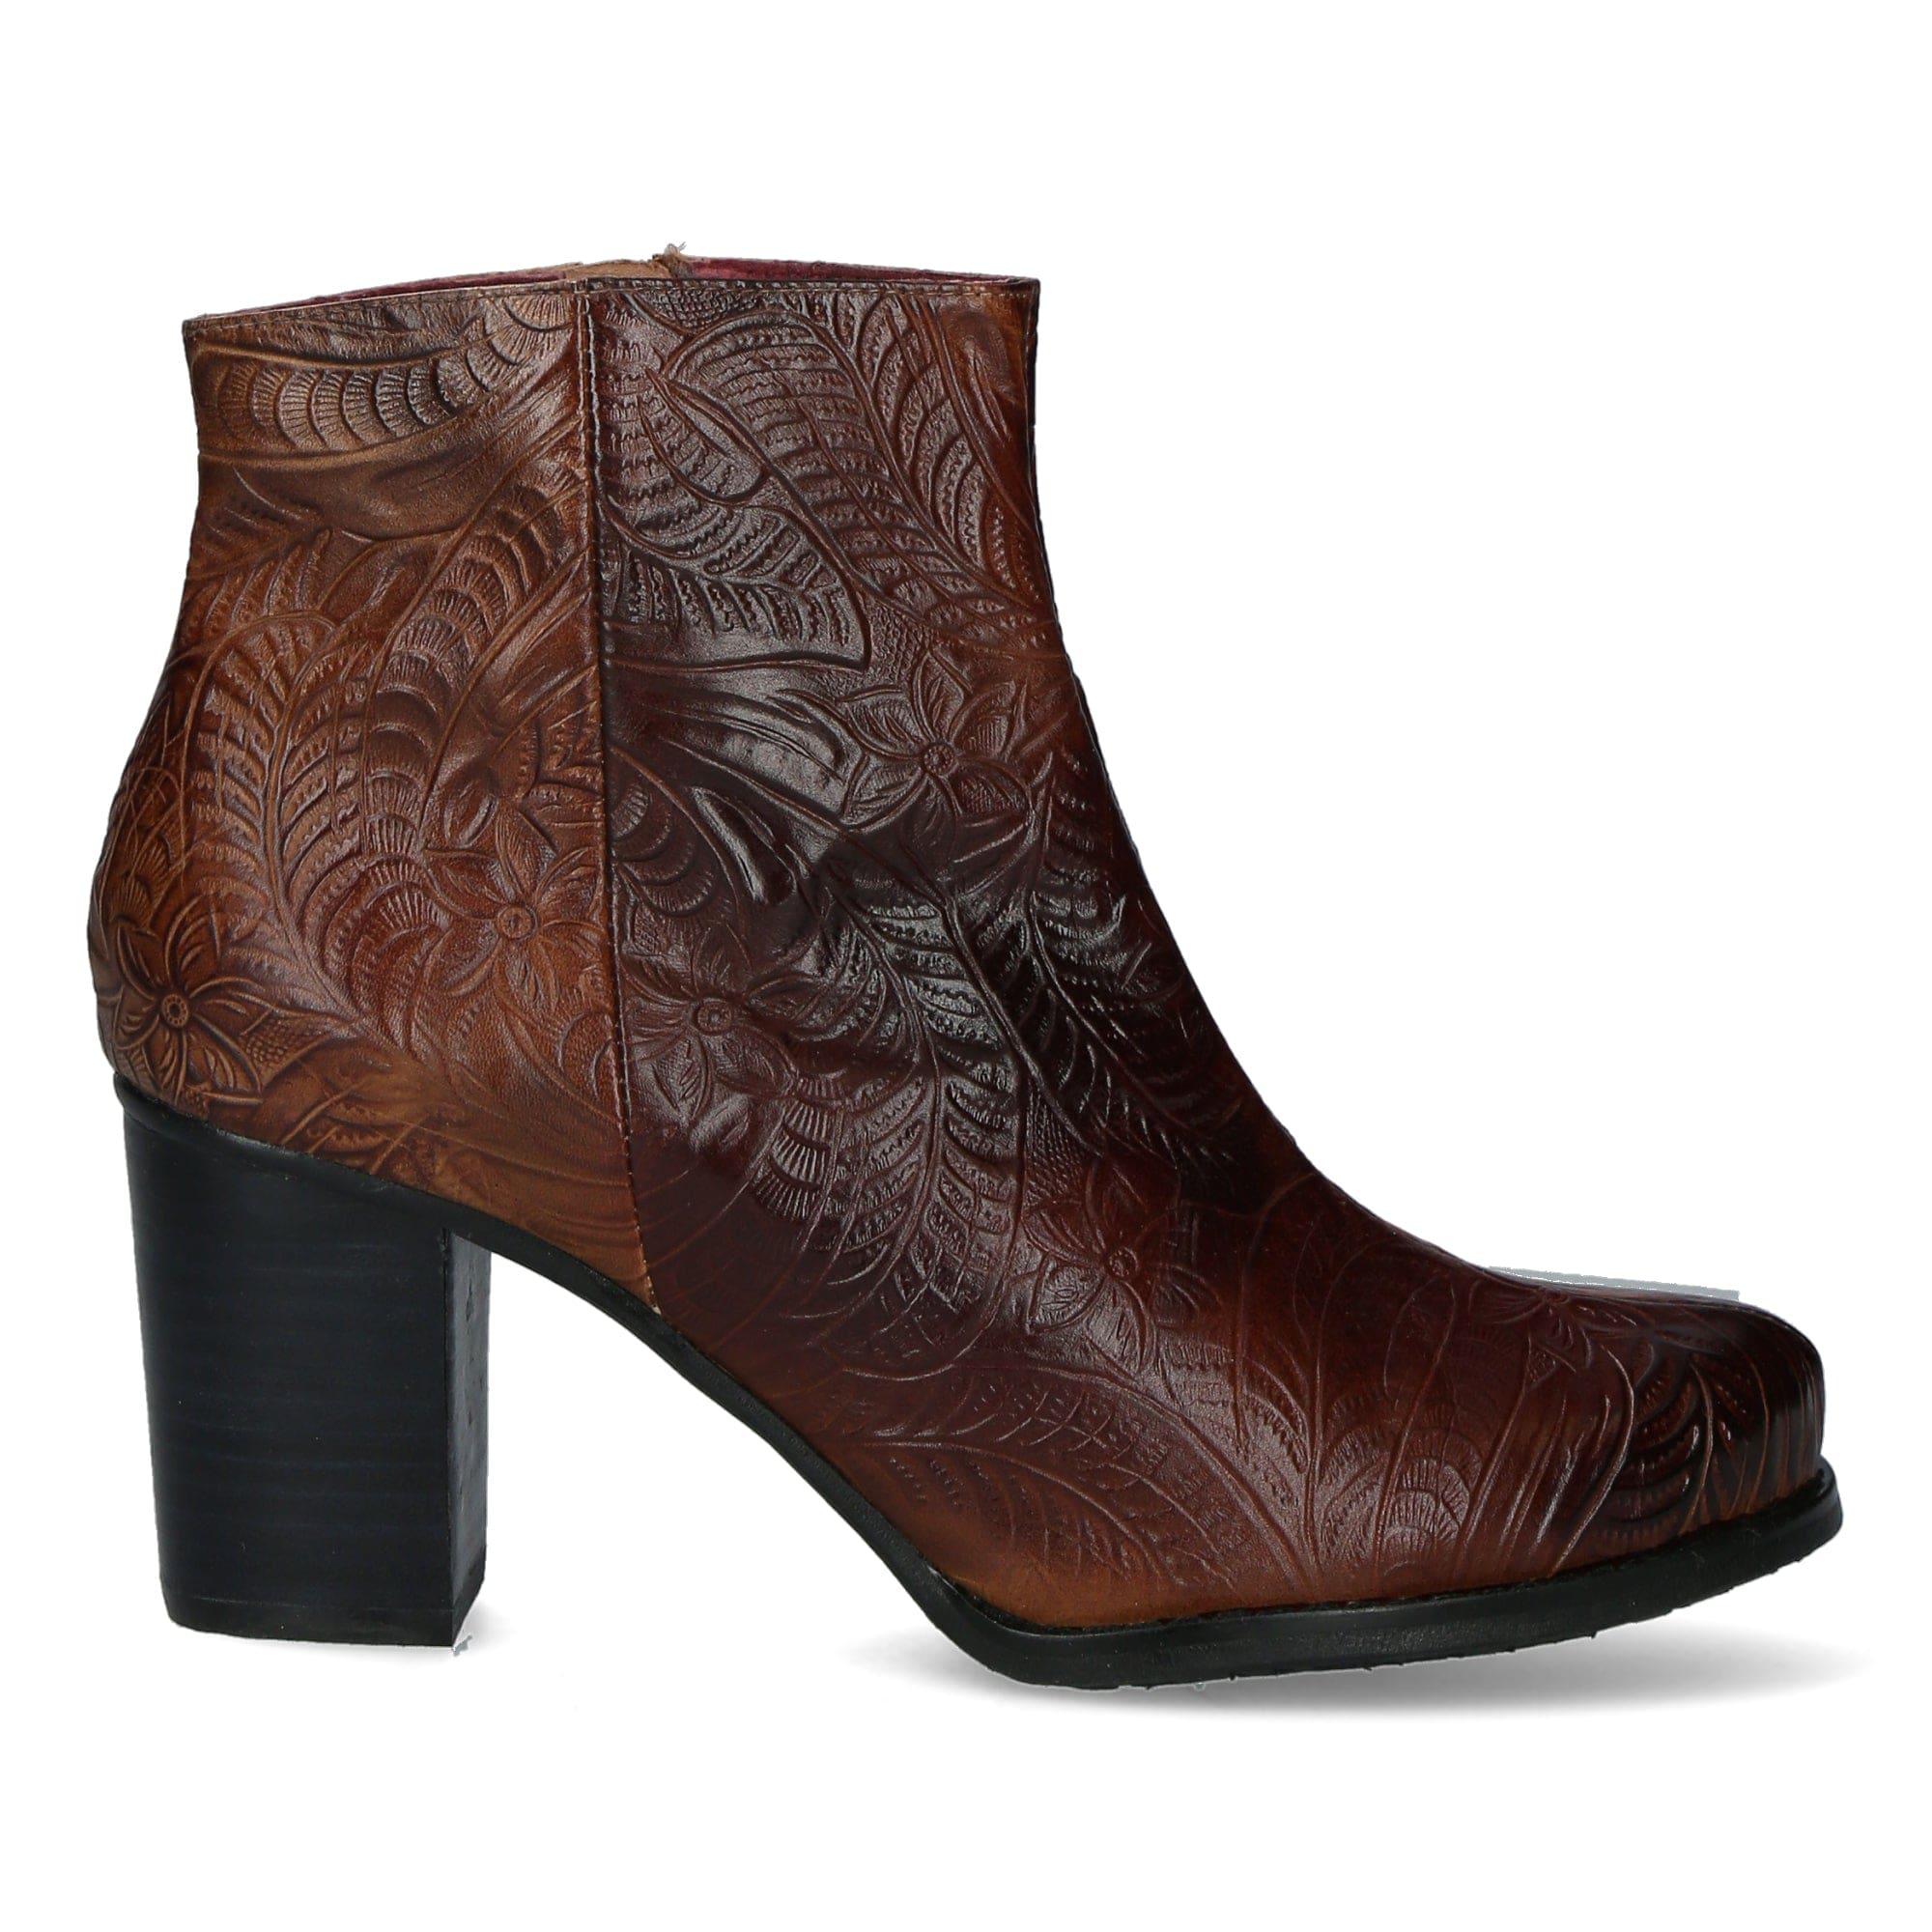 MARENA Shoes - 35 / Hazelnut - Boots